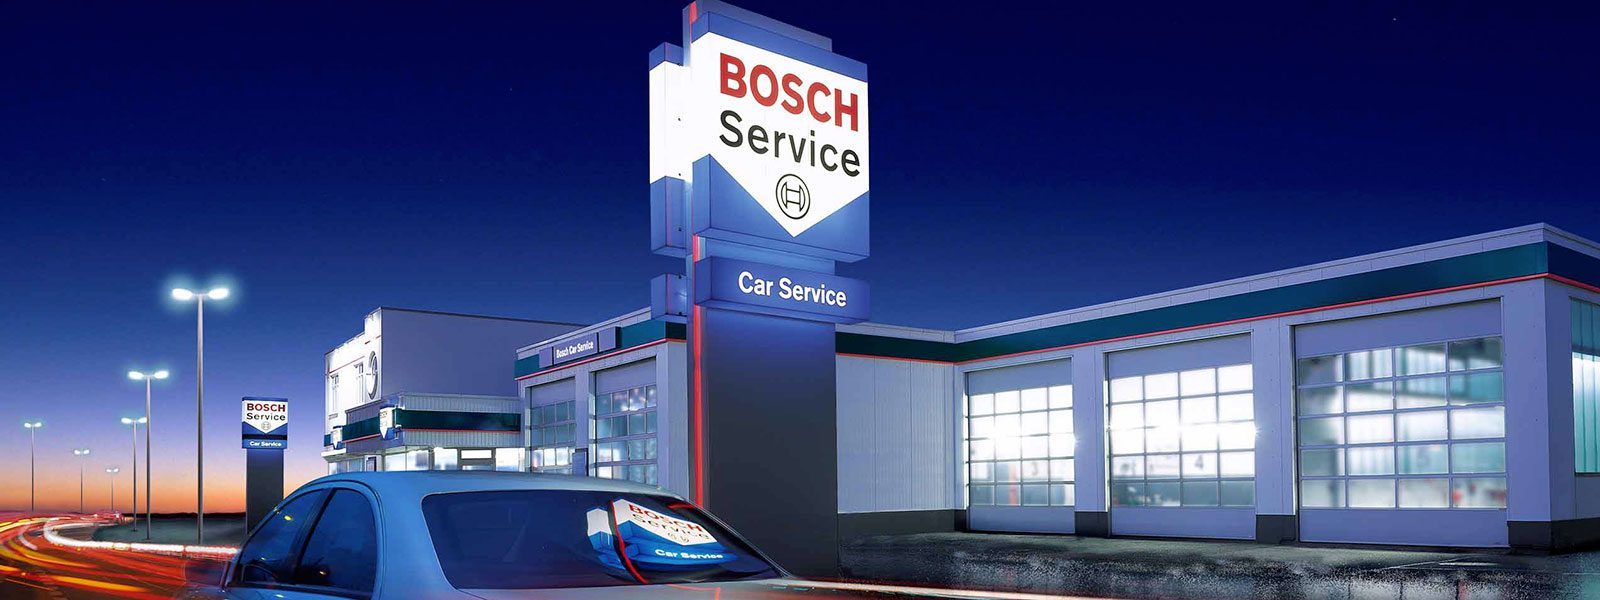 bosh-service